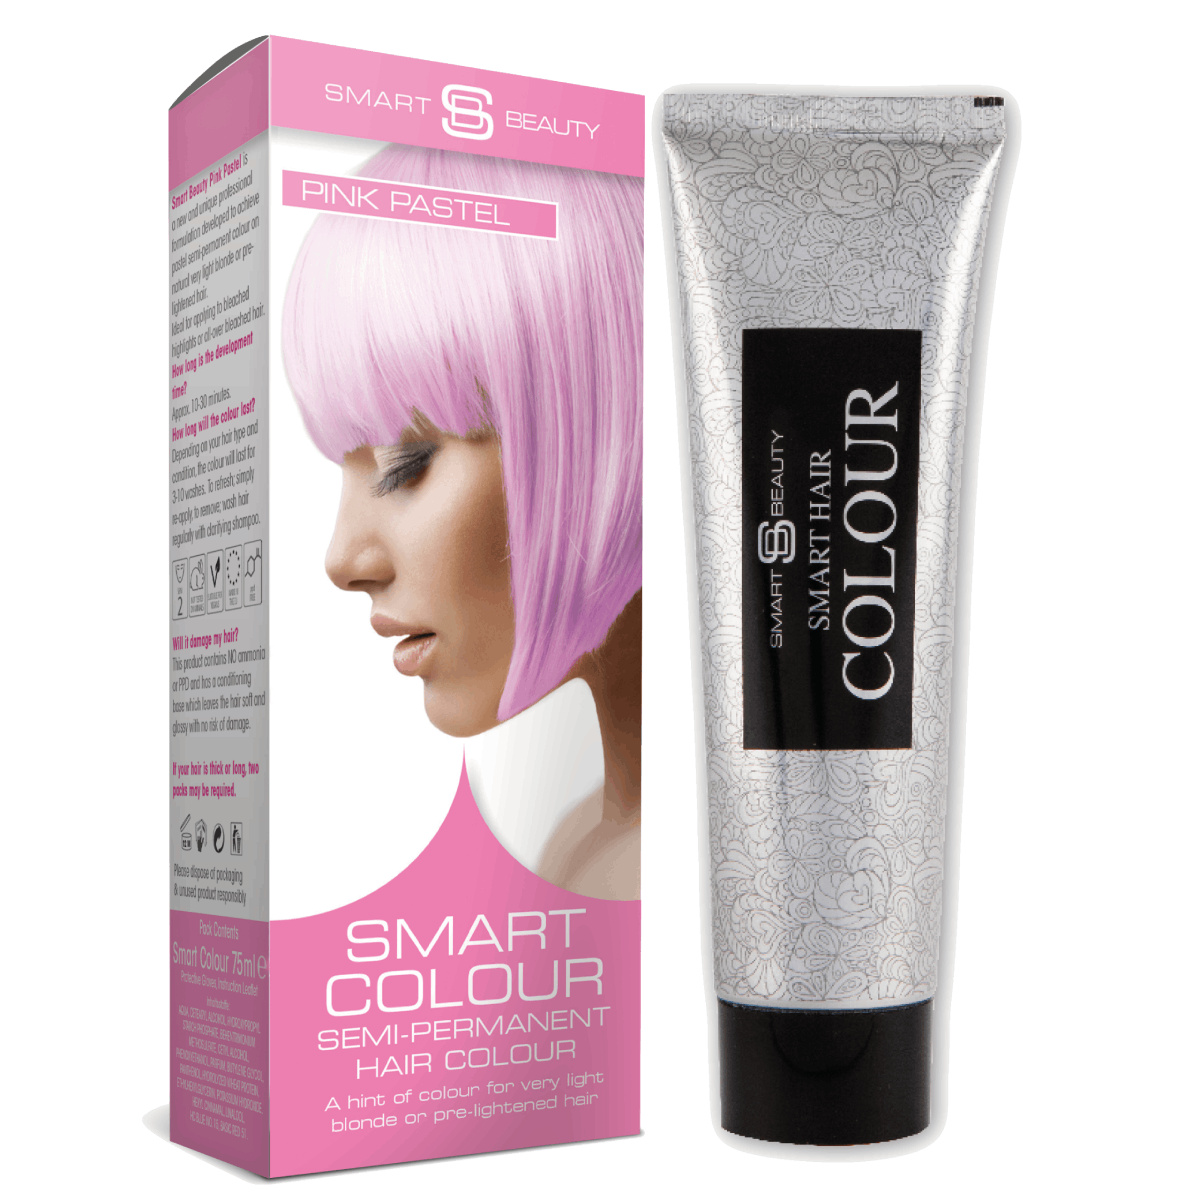 Candy Floss Pink Pastel Hair Dye | Semi-permanent Hair Colour